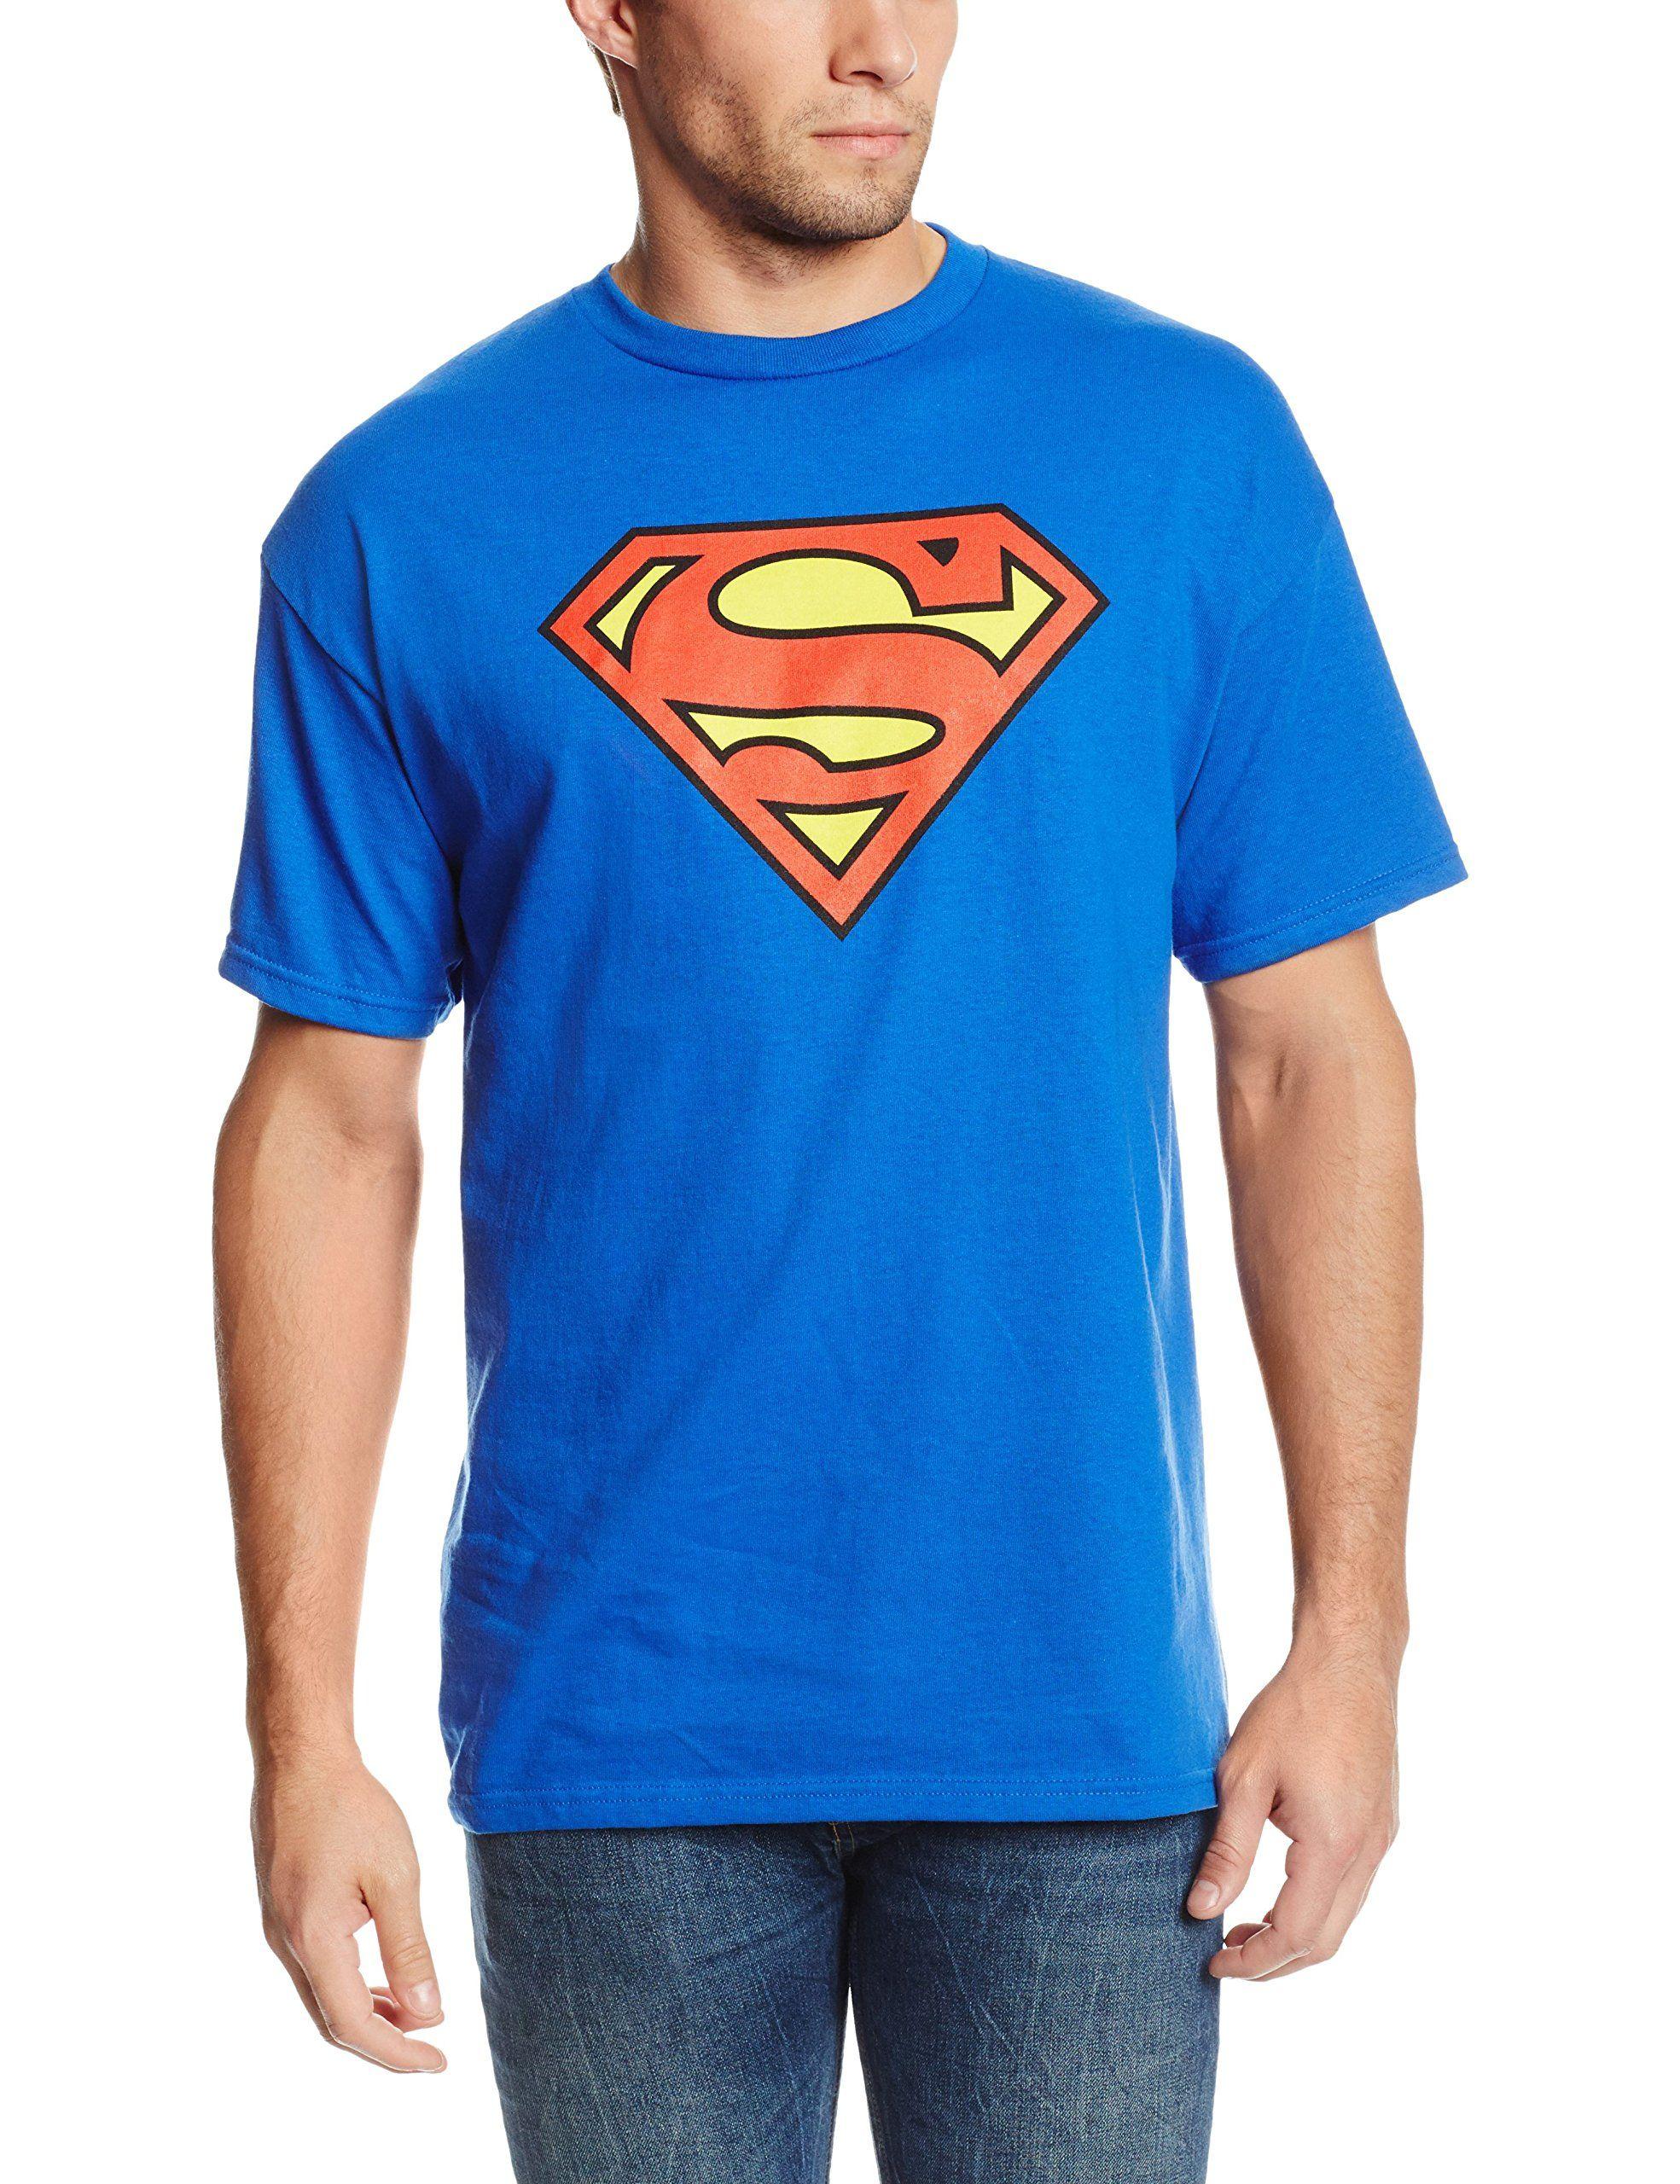 Forest Green Superman Logo - Buy WYMY Men's T Shirt Superhero Superman Blue Logo ForestGreen ...